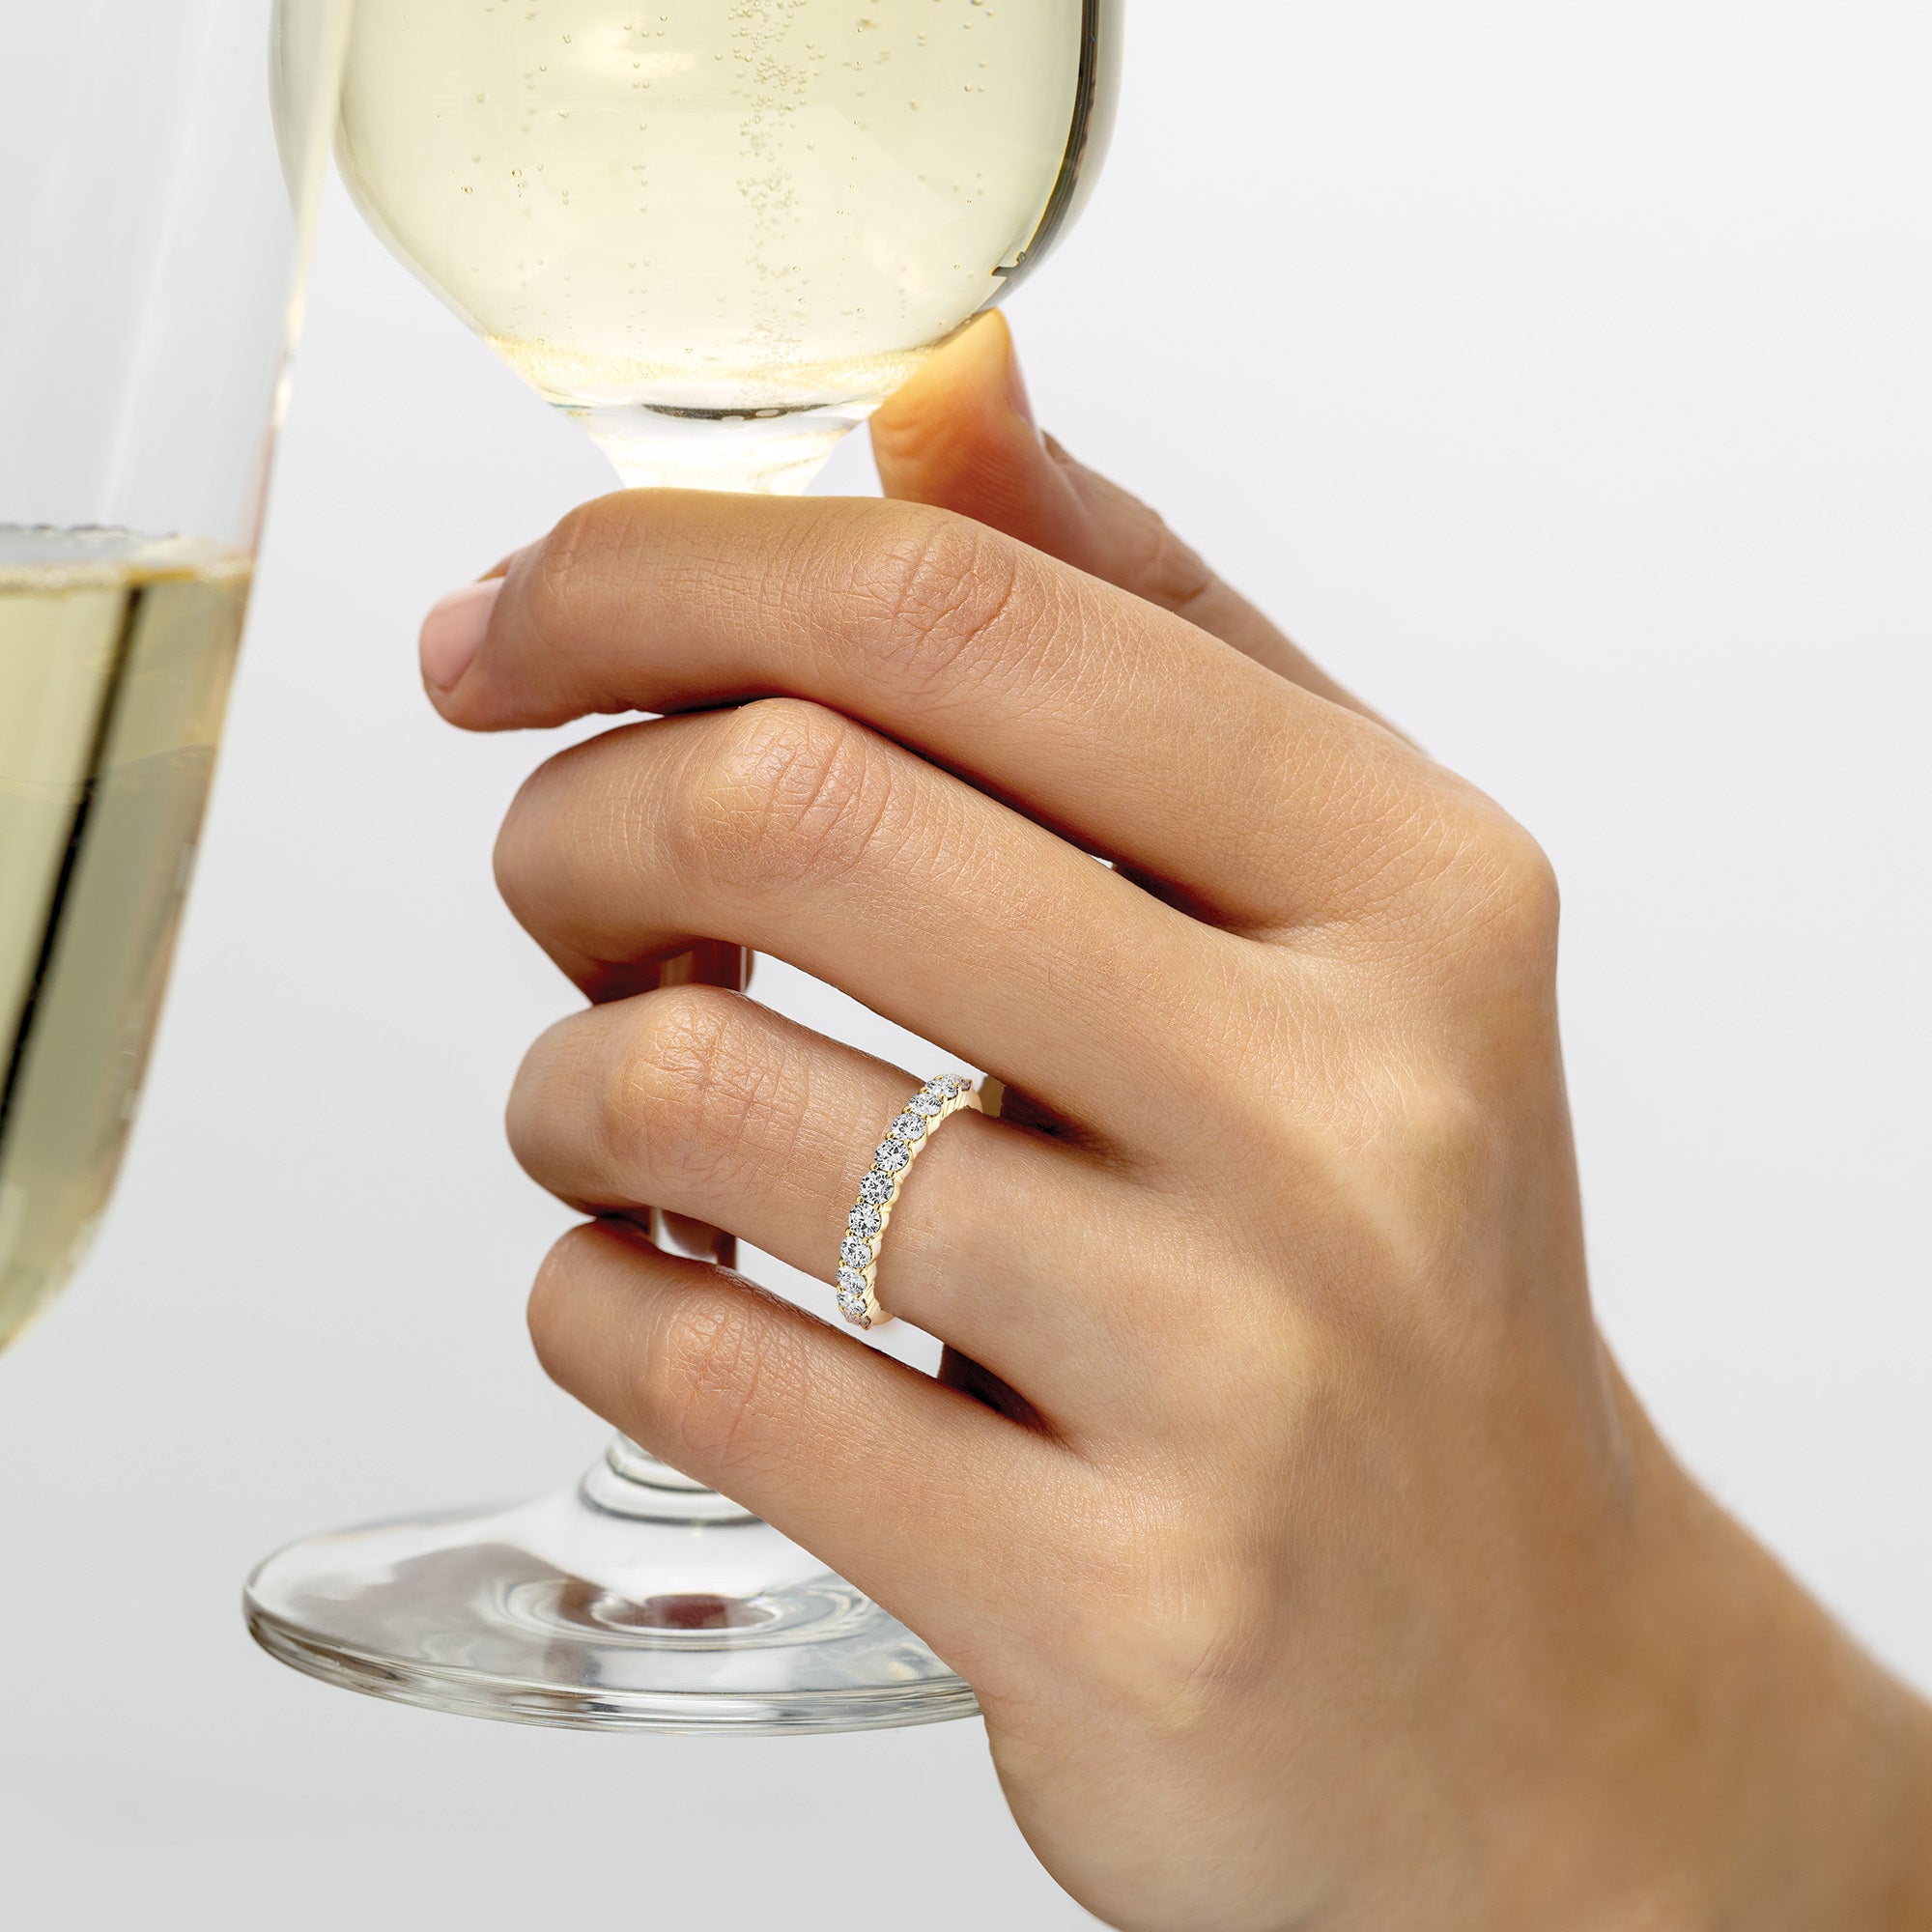 0.5 Carat Round Diamond Classic Wedding Ring, Shared Prong Style